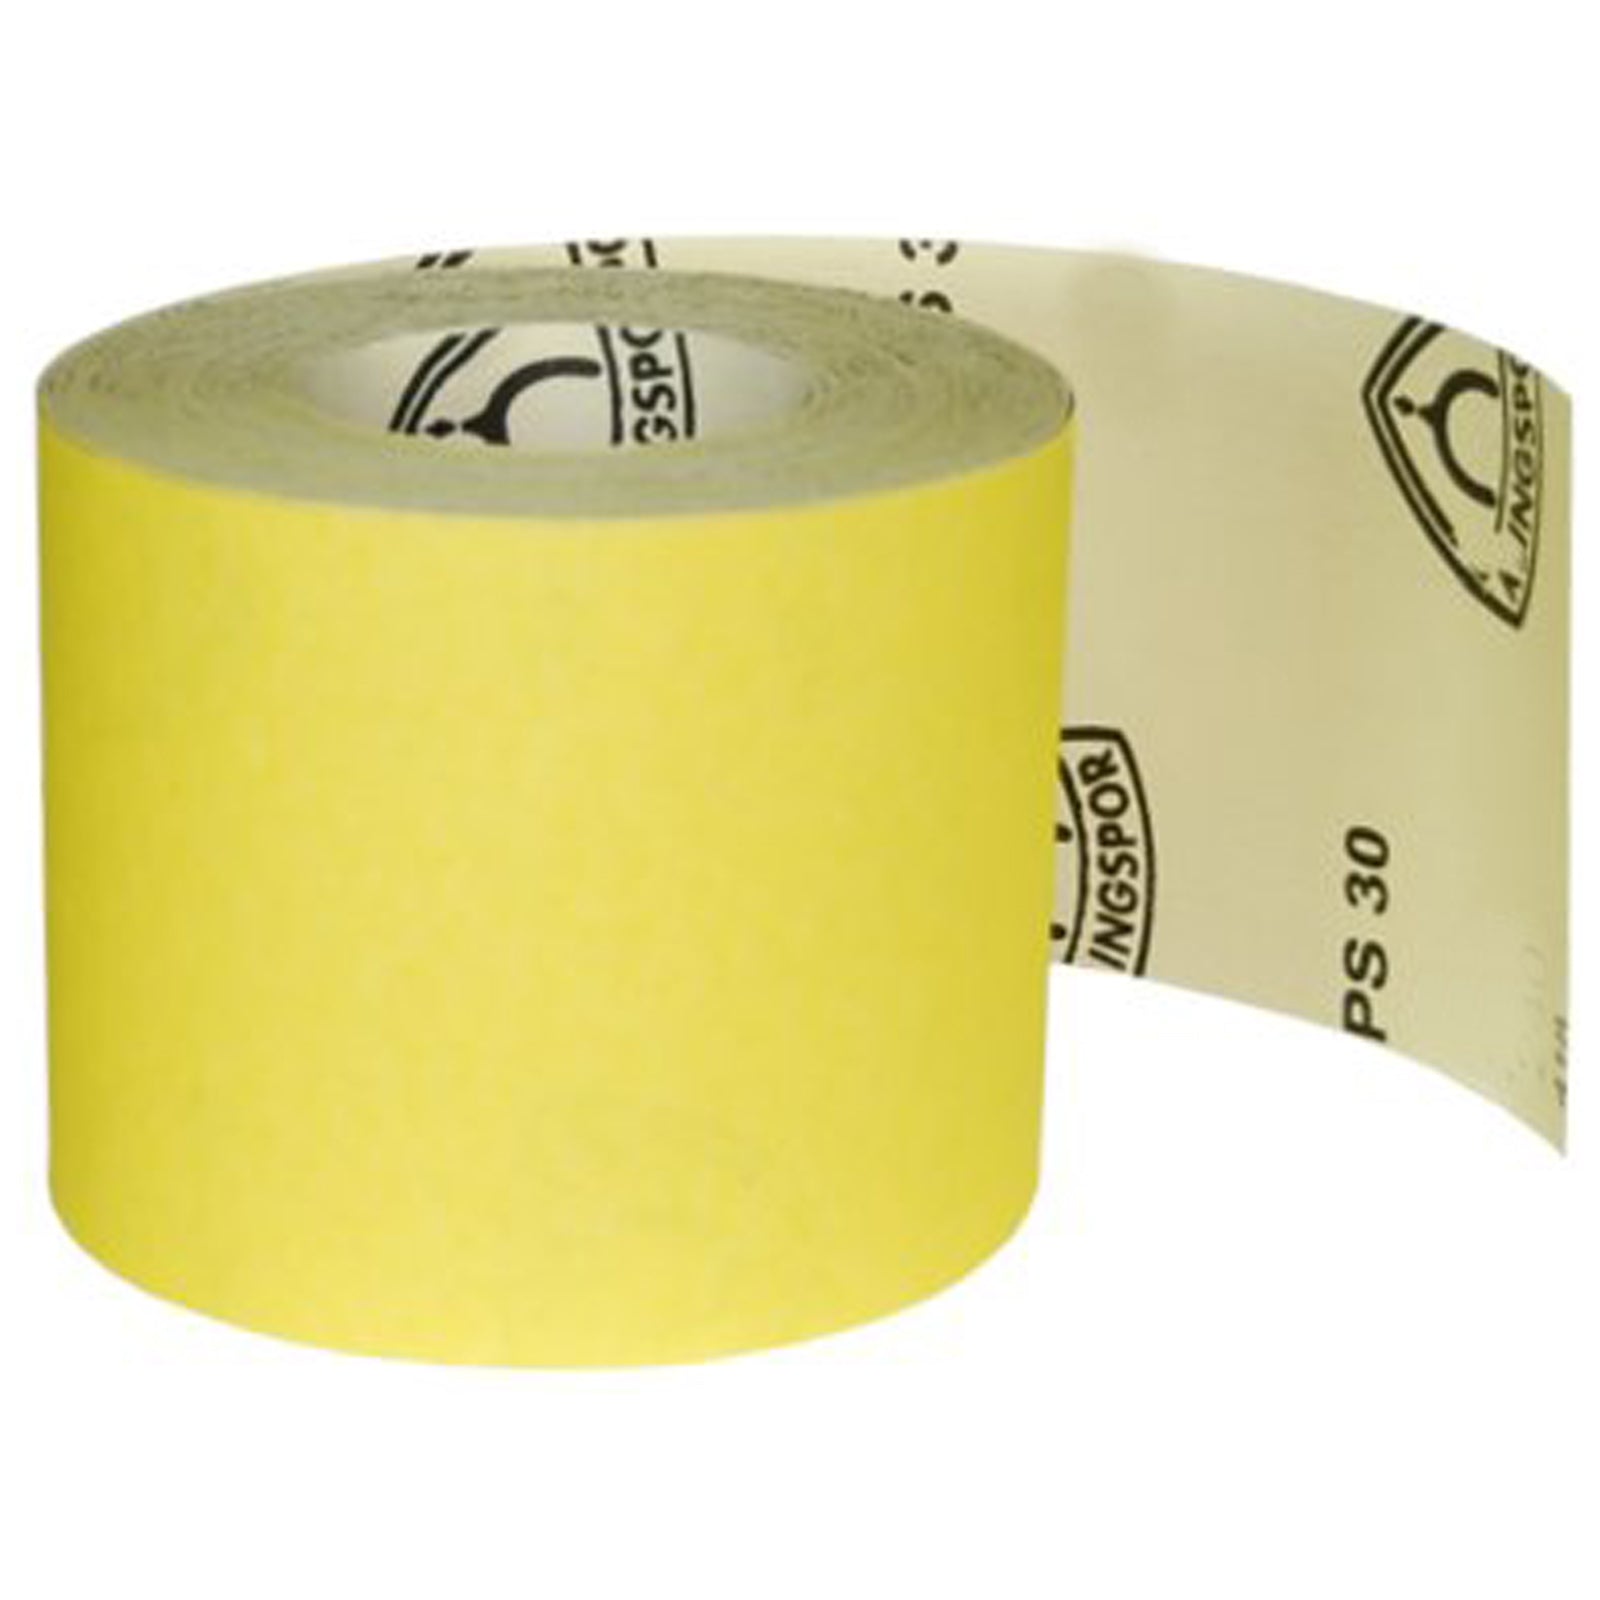 Klingspor 115mm x 4.5m PS30D Abrasive Paper Roll Sandpaper Rolls